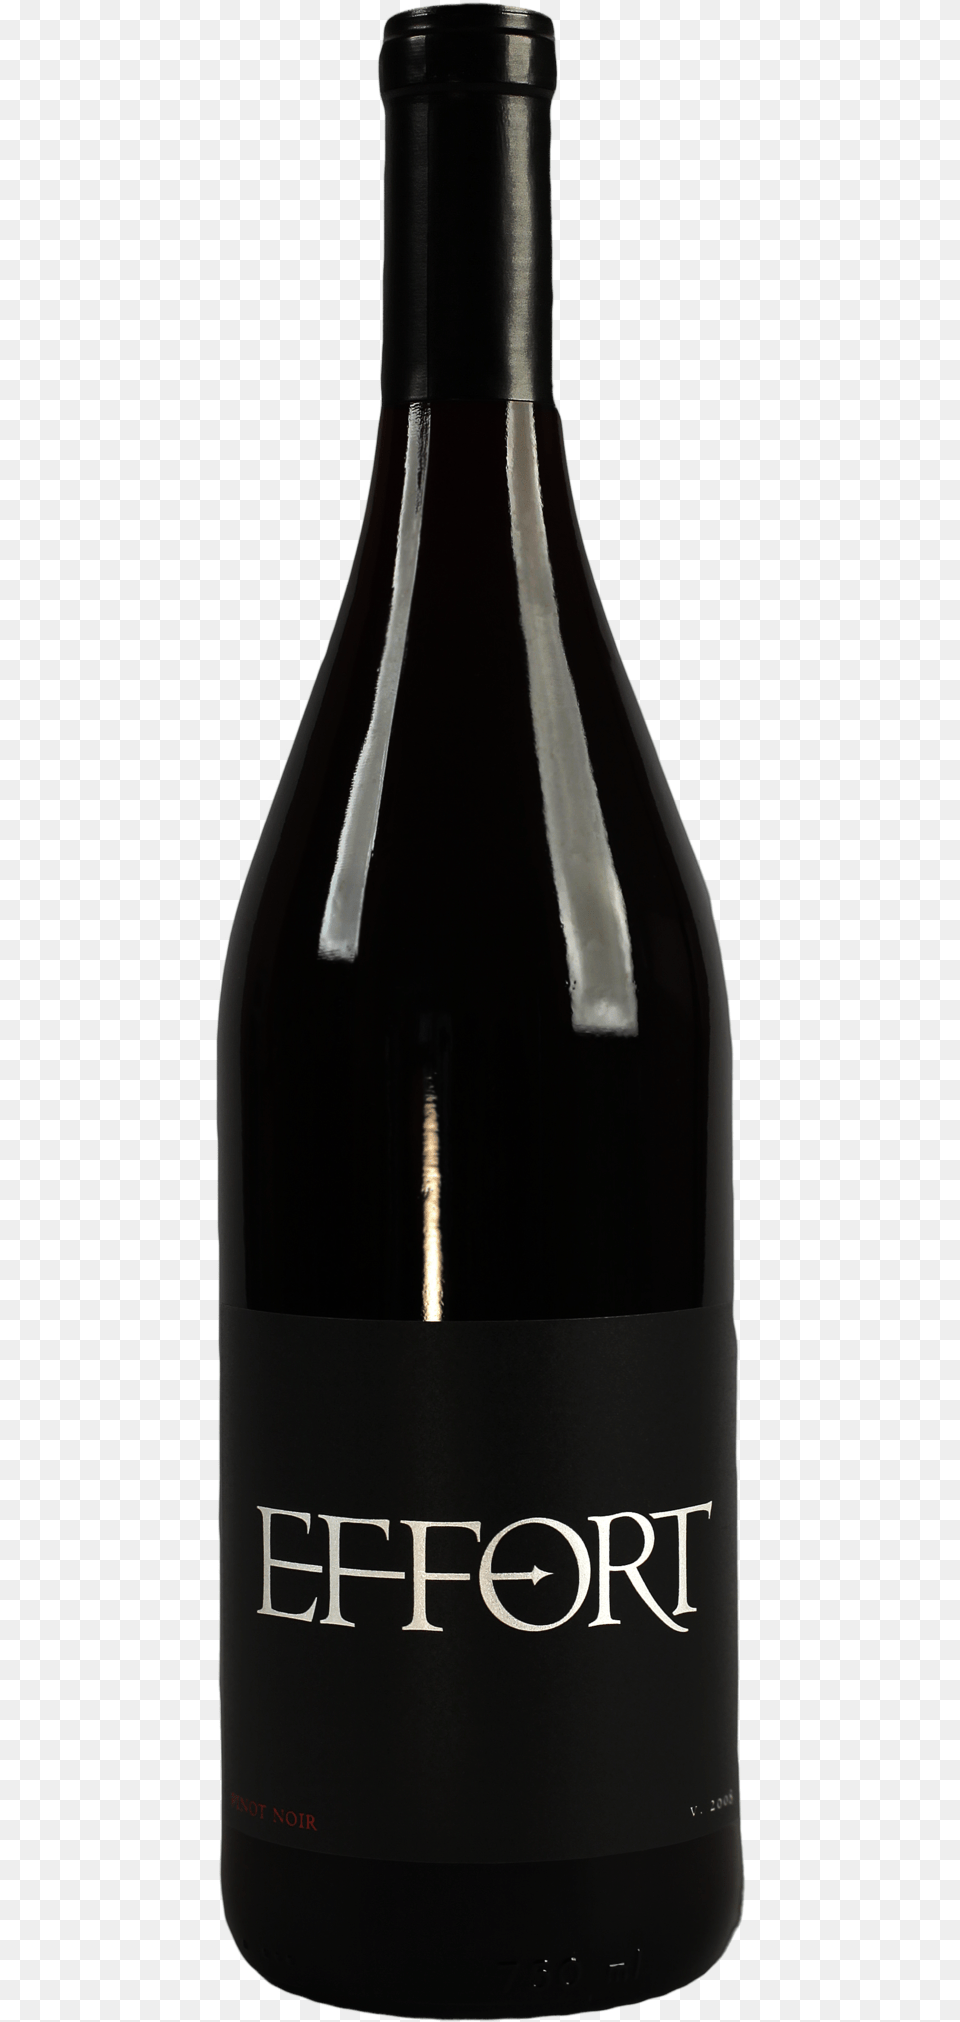 Effort Pinot Noir Glass Bottle, Alcohol, Beverage, Liquor, Wine Png Image